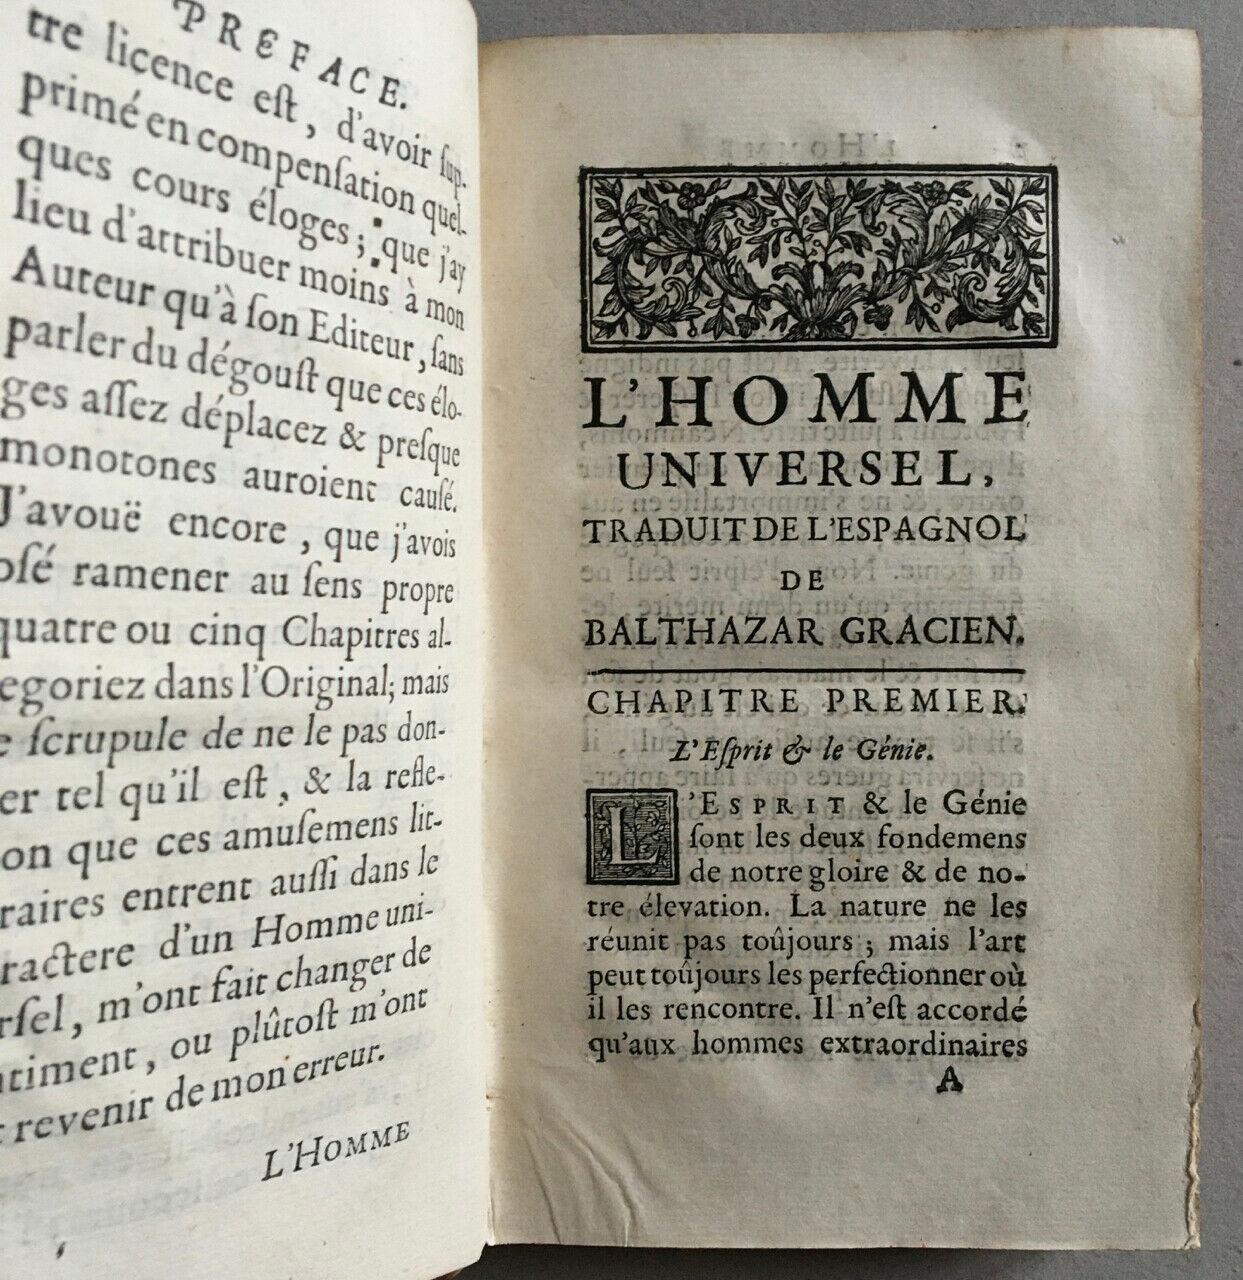 Baltasar Gracien [Baltazar Gracian] — Universal Man — É.O. — Pissot — 1723.